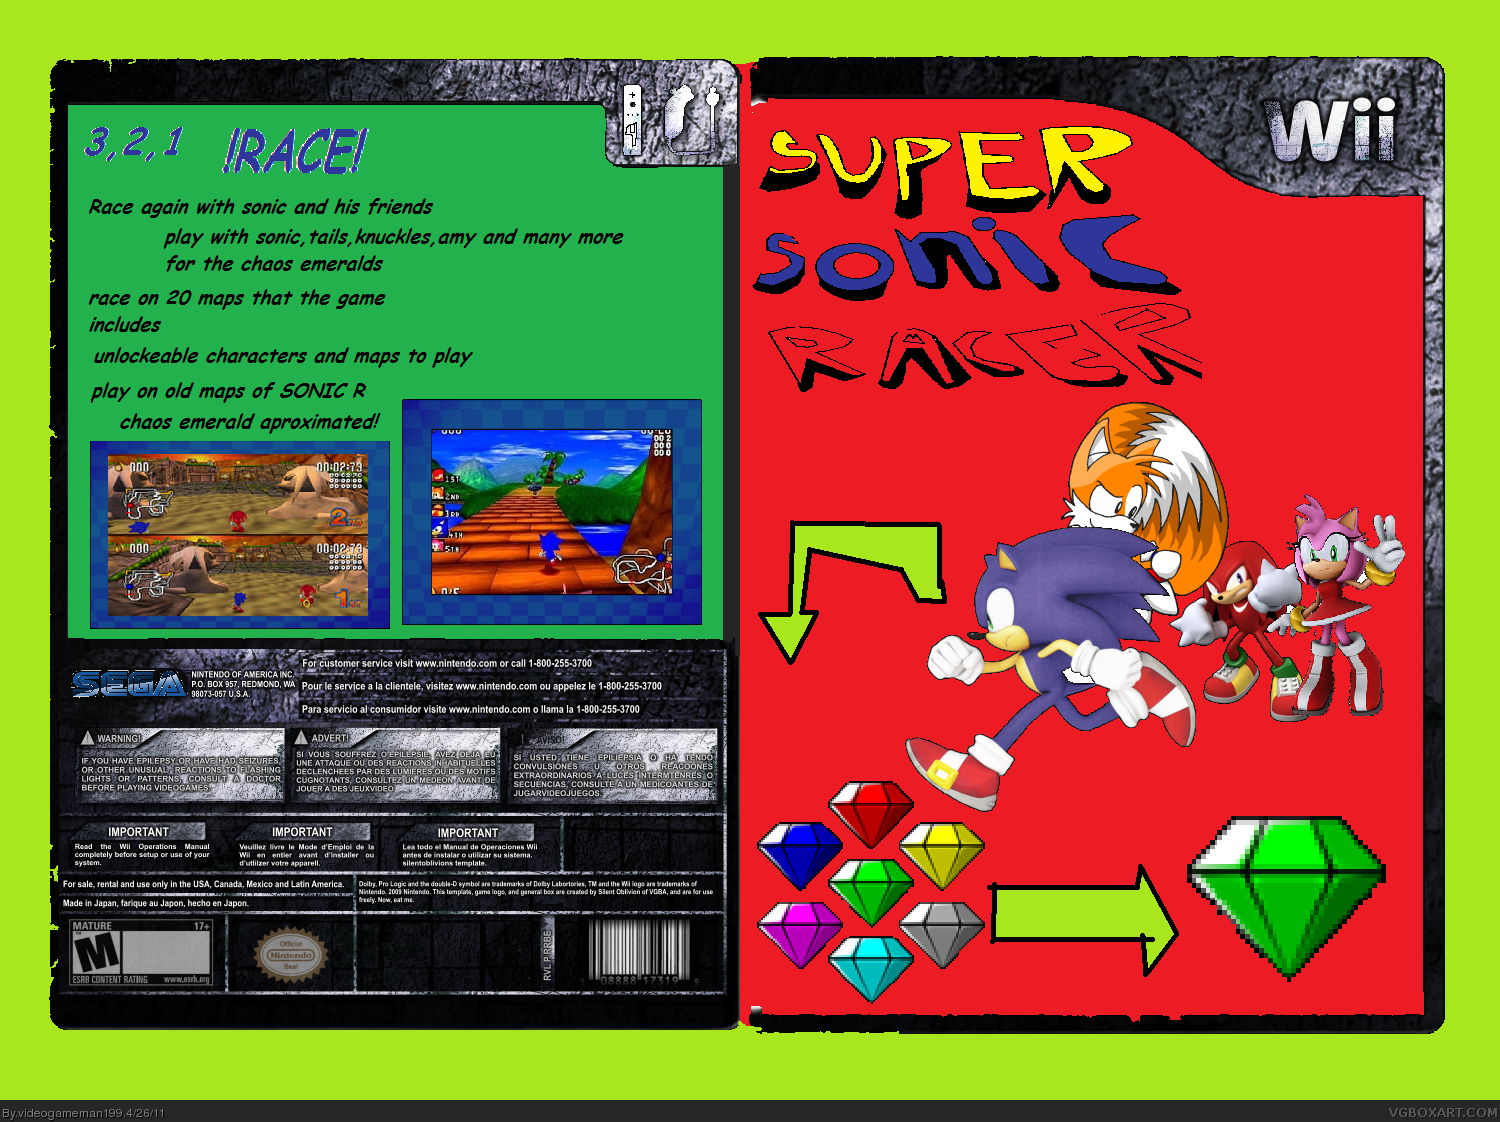 Super Sonic Racer box cover